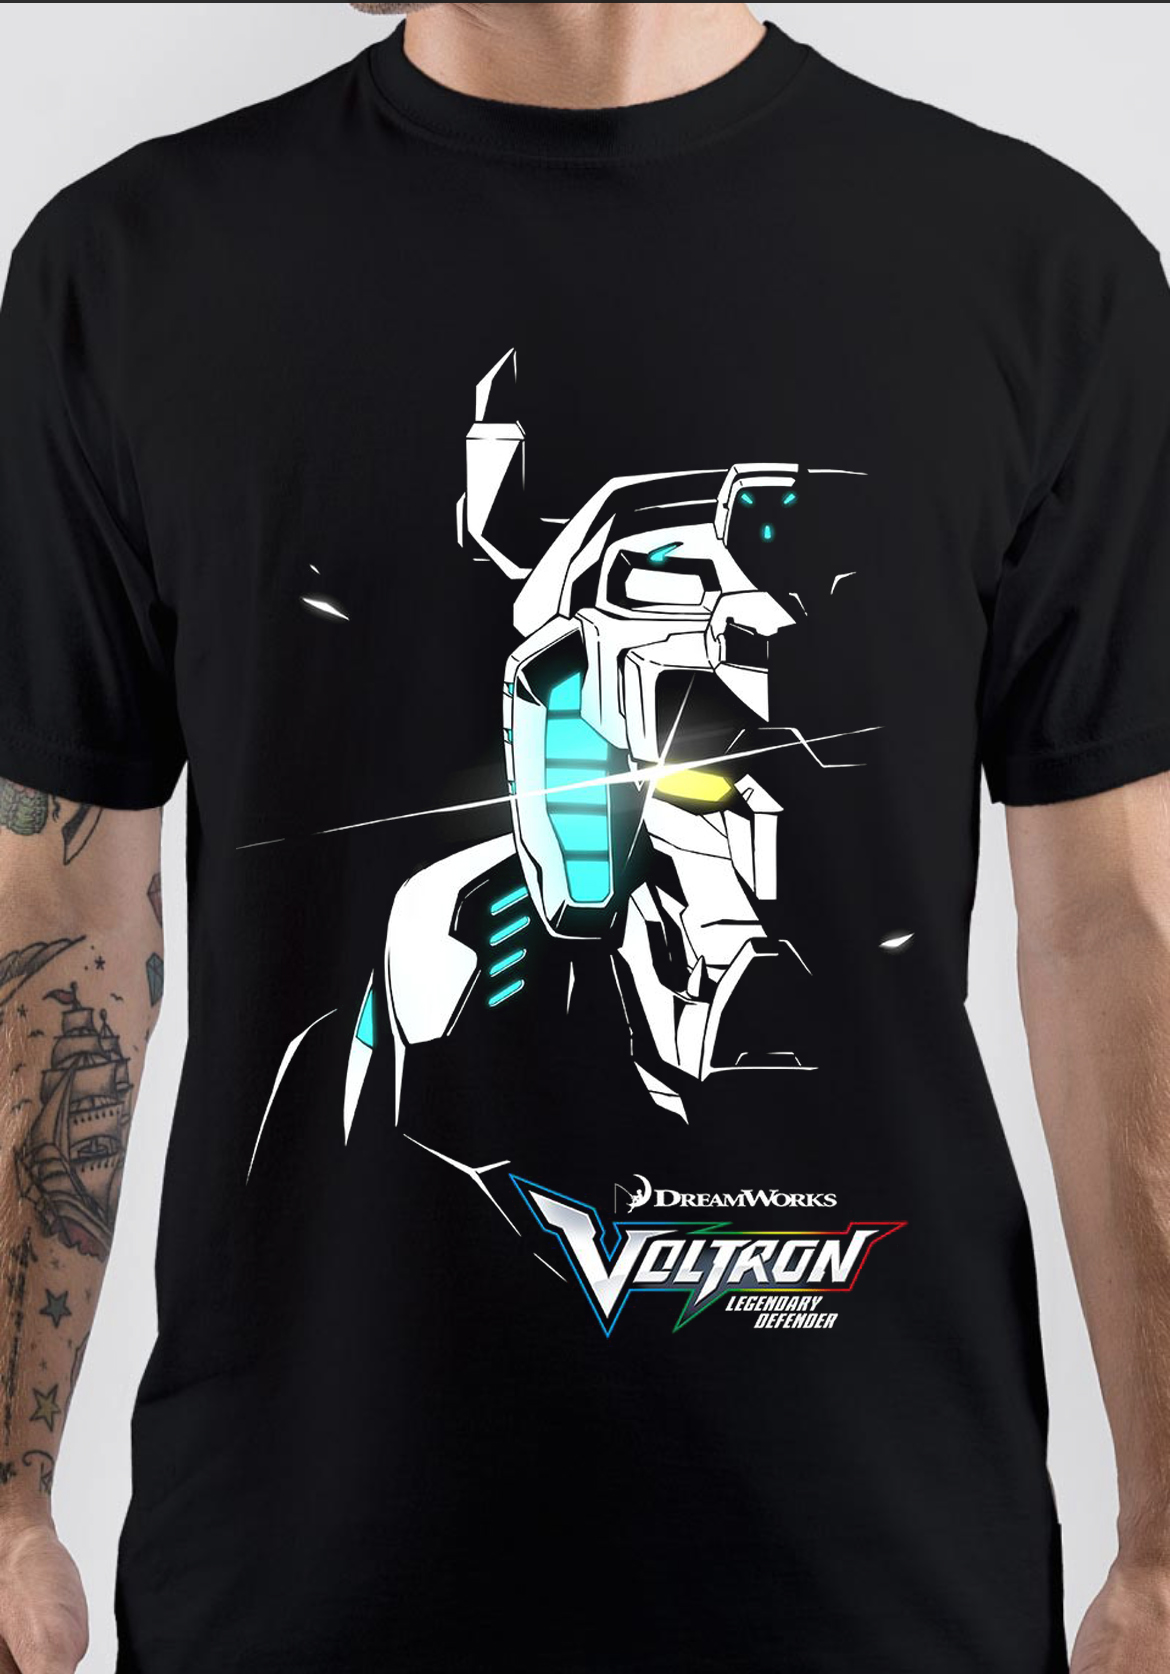 Voltron Legendary Defender T-Shirt And Merchandise